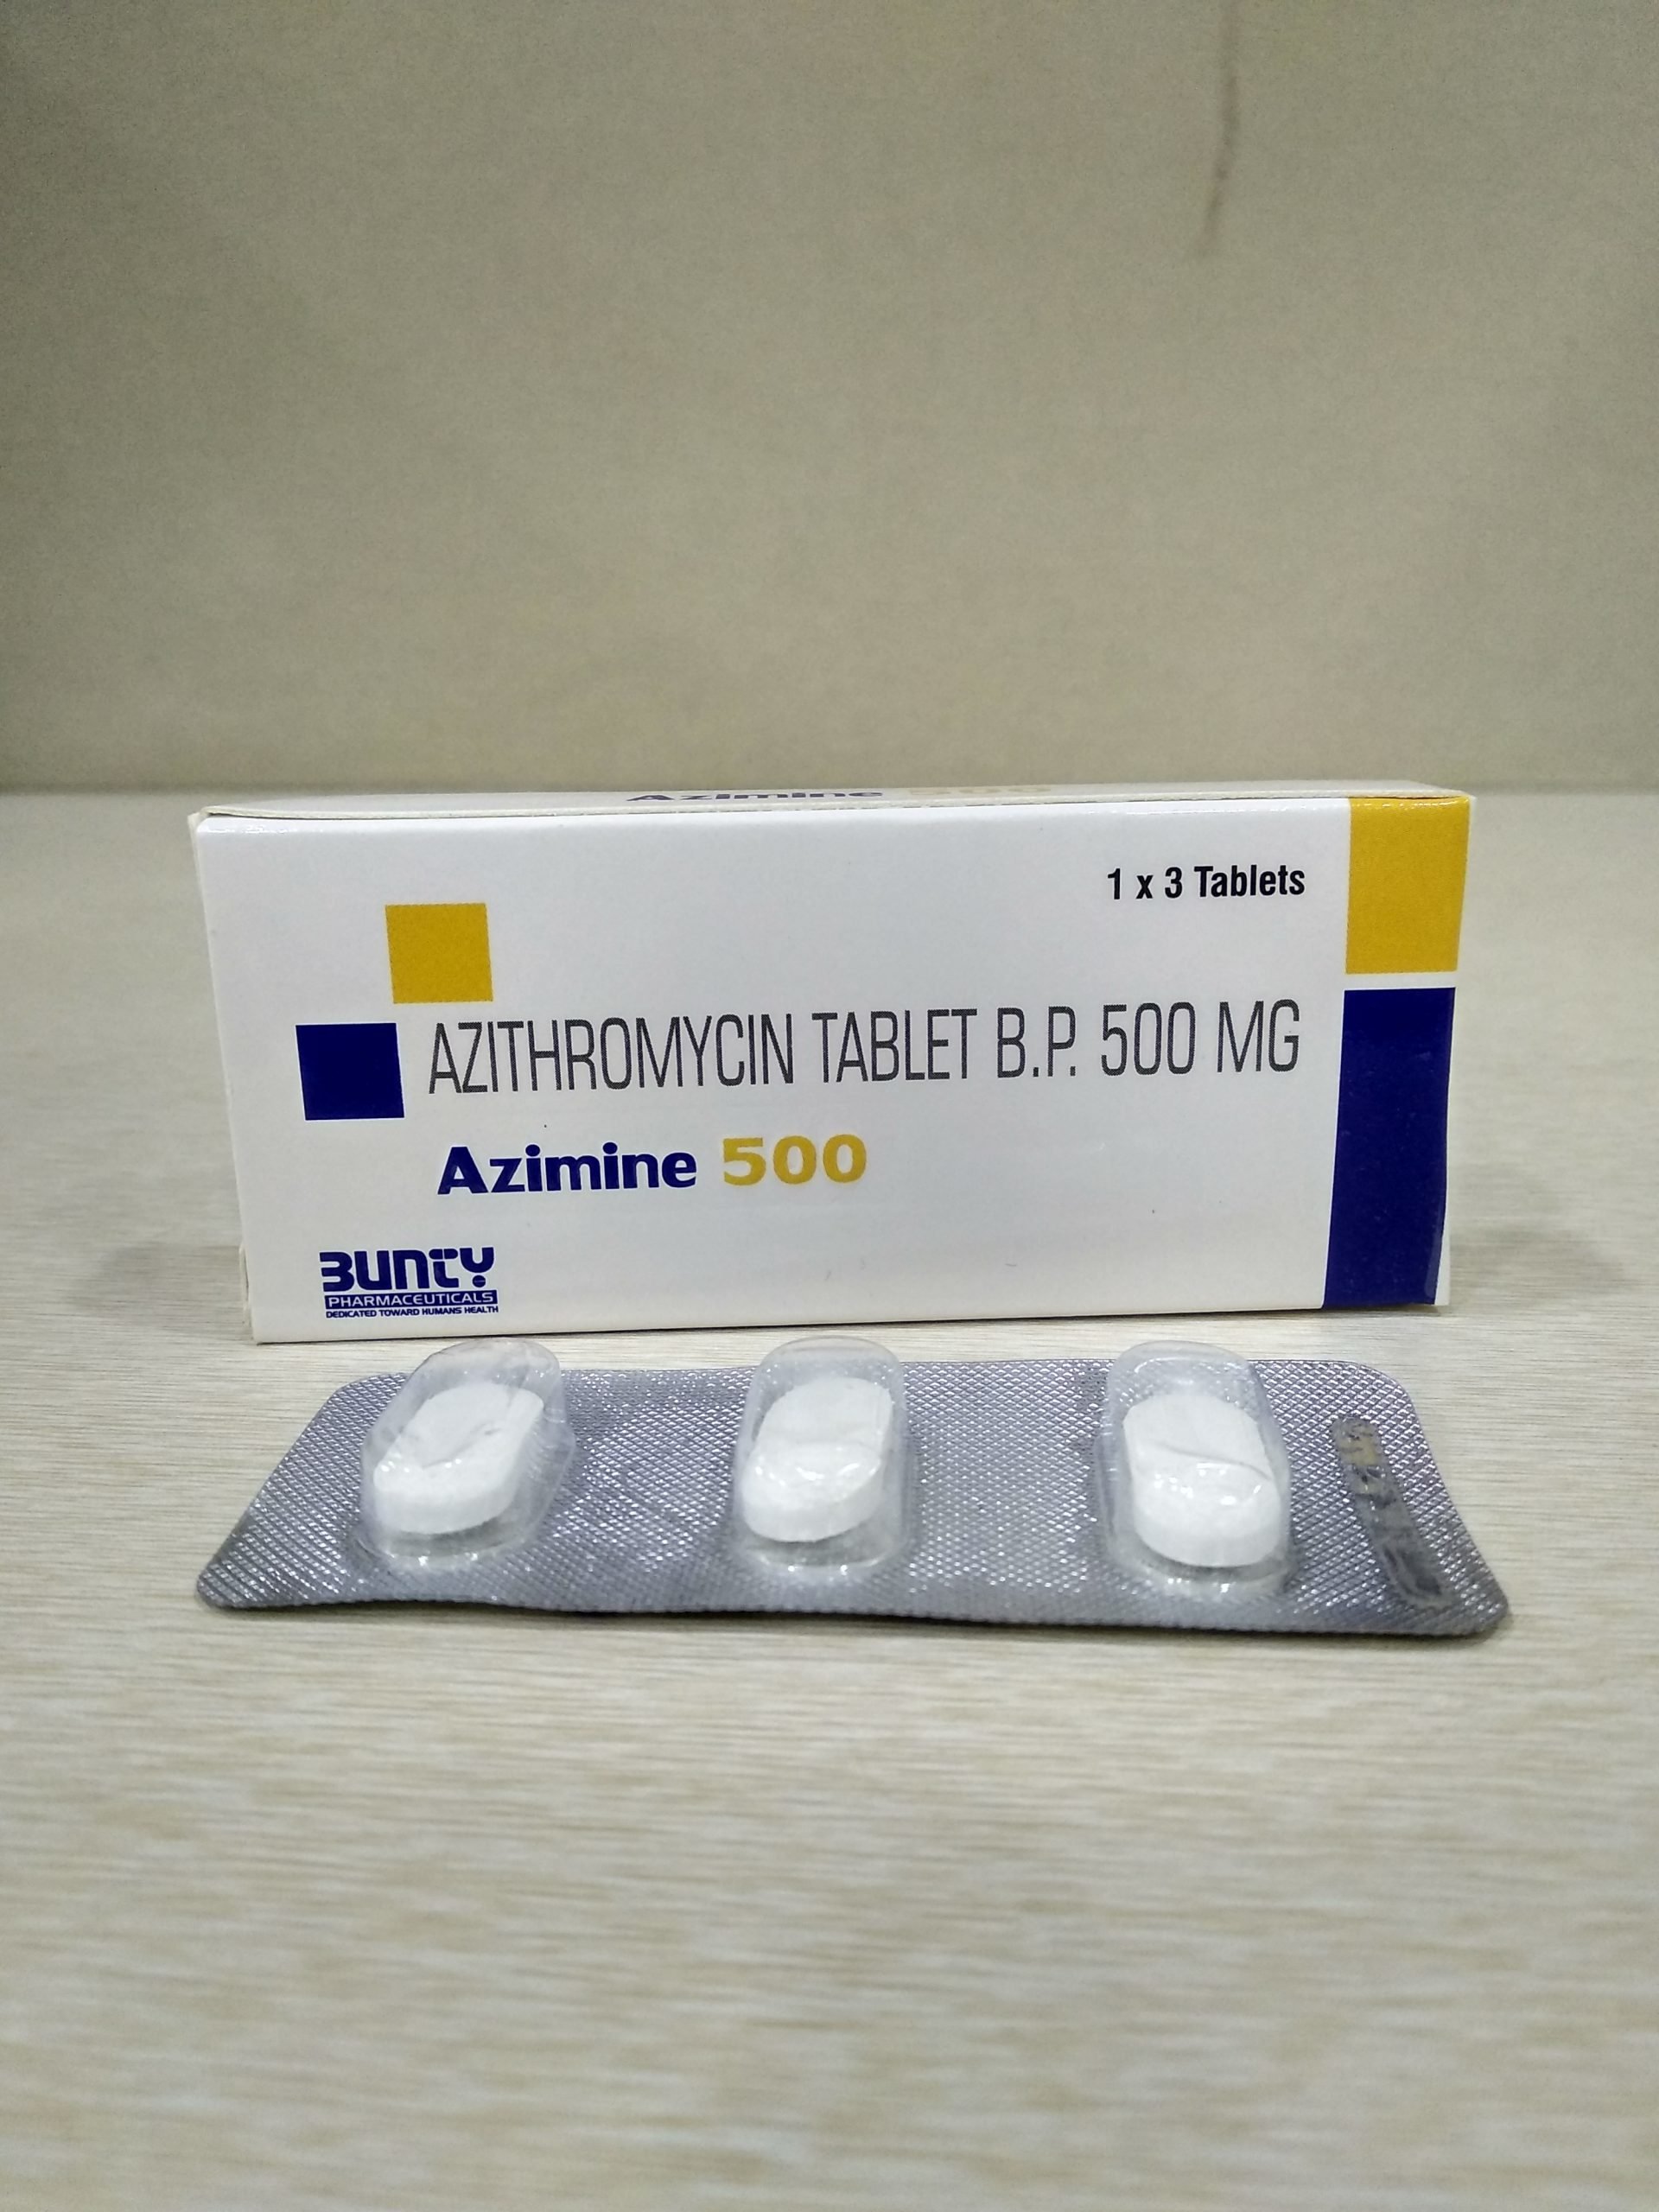 Azithromycin Tablets 500 MG Manufacturer, Supplier in Vadodara,Gujarat